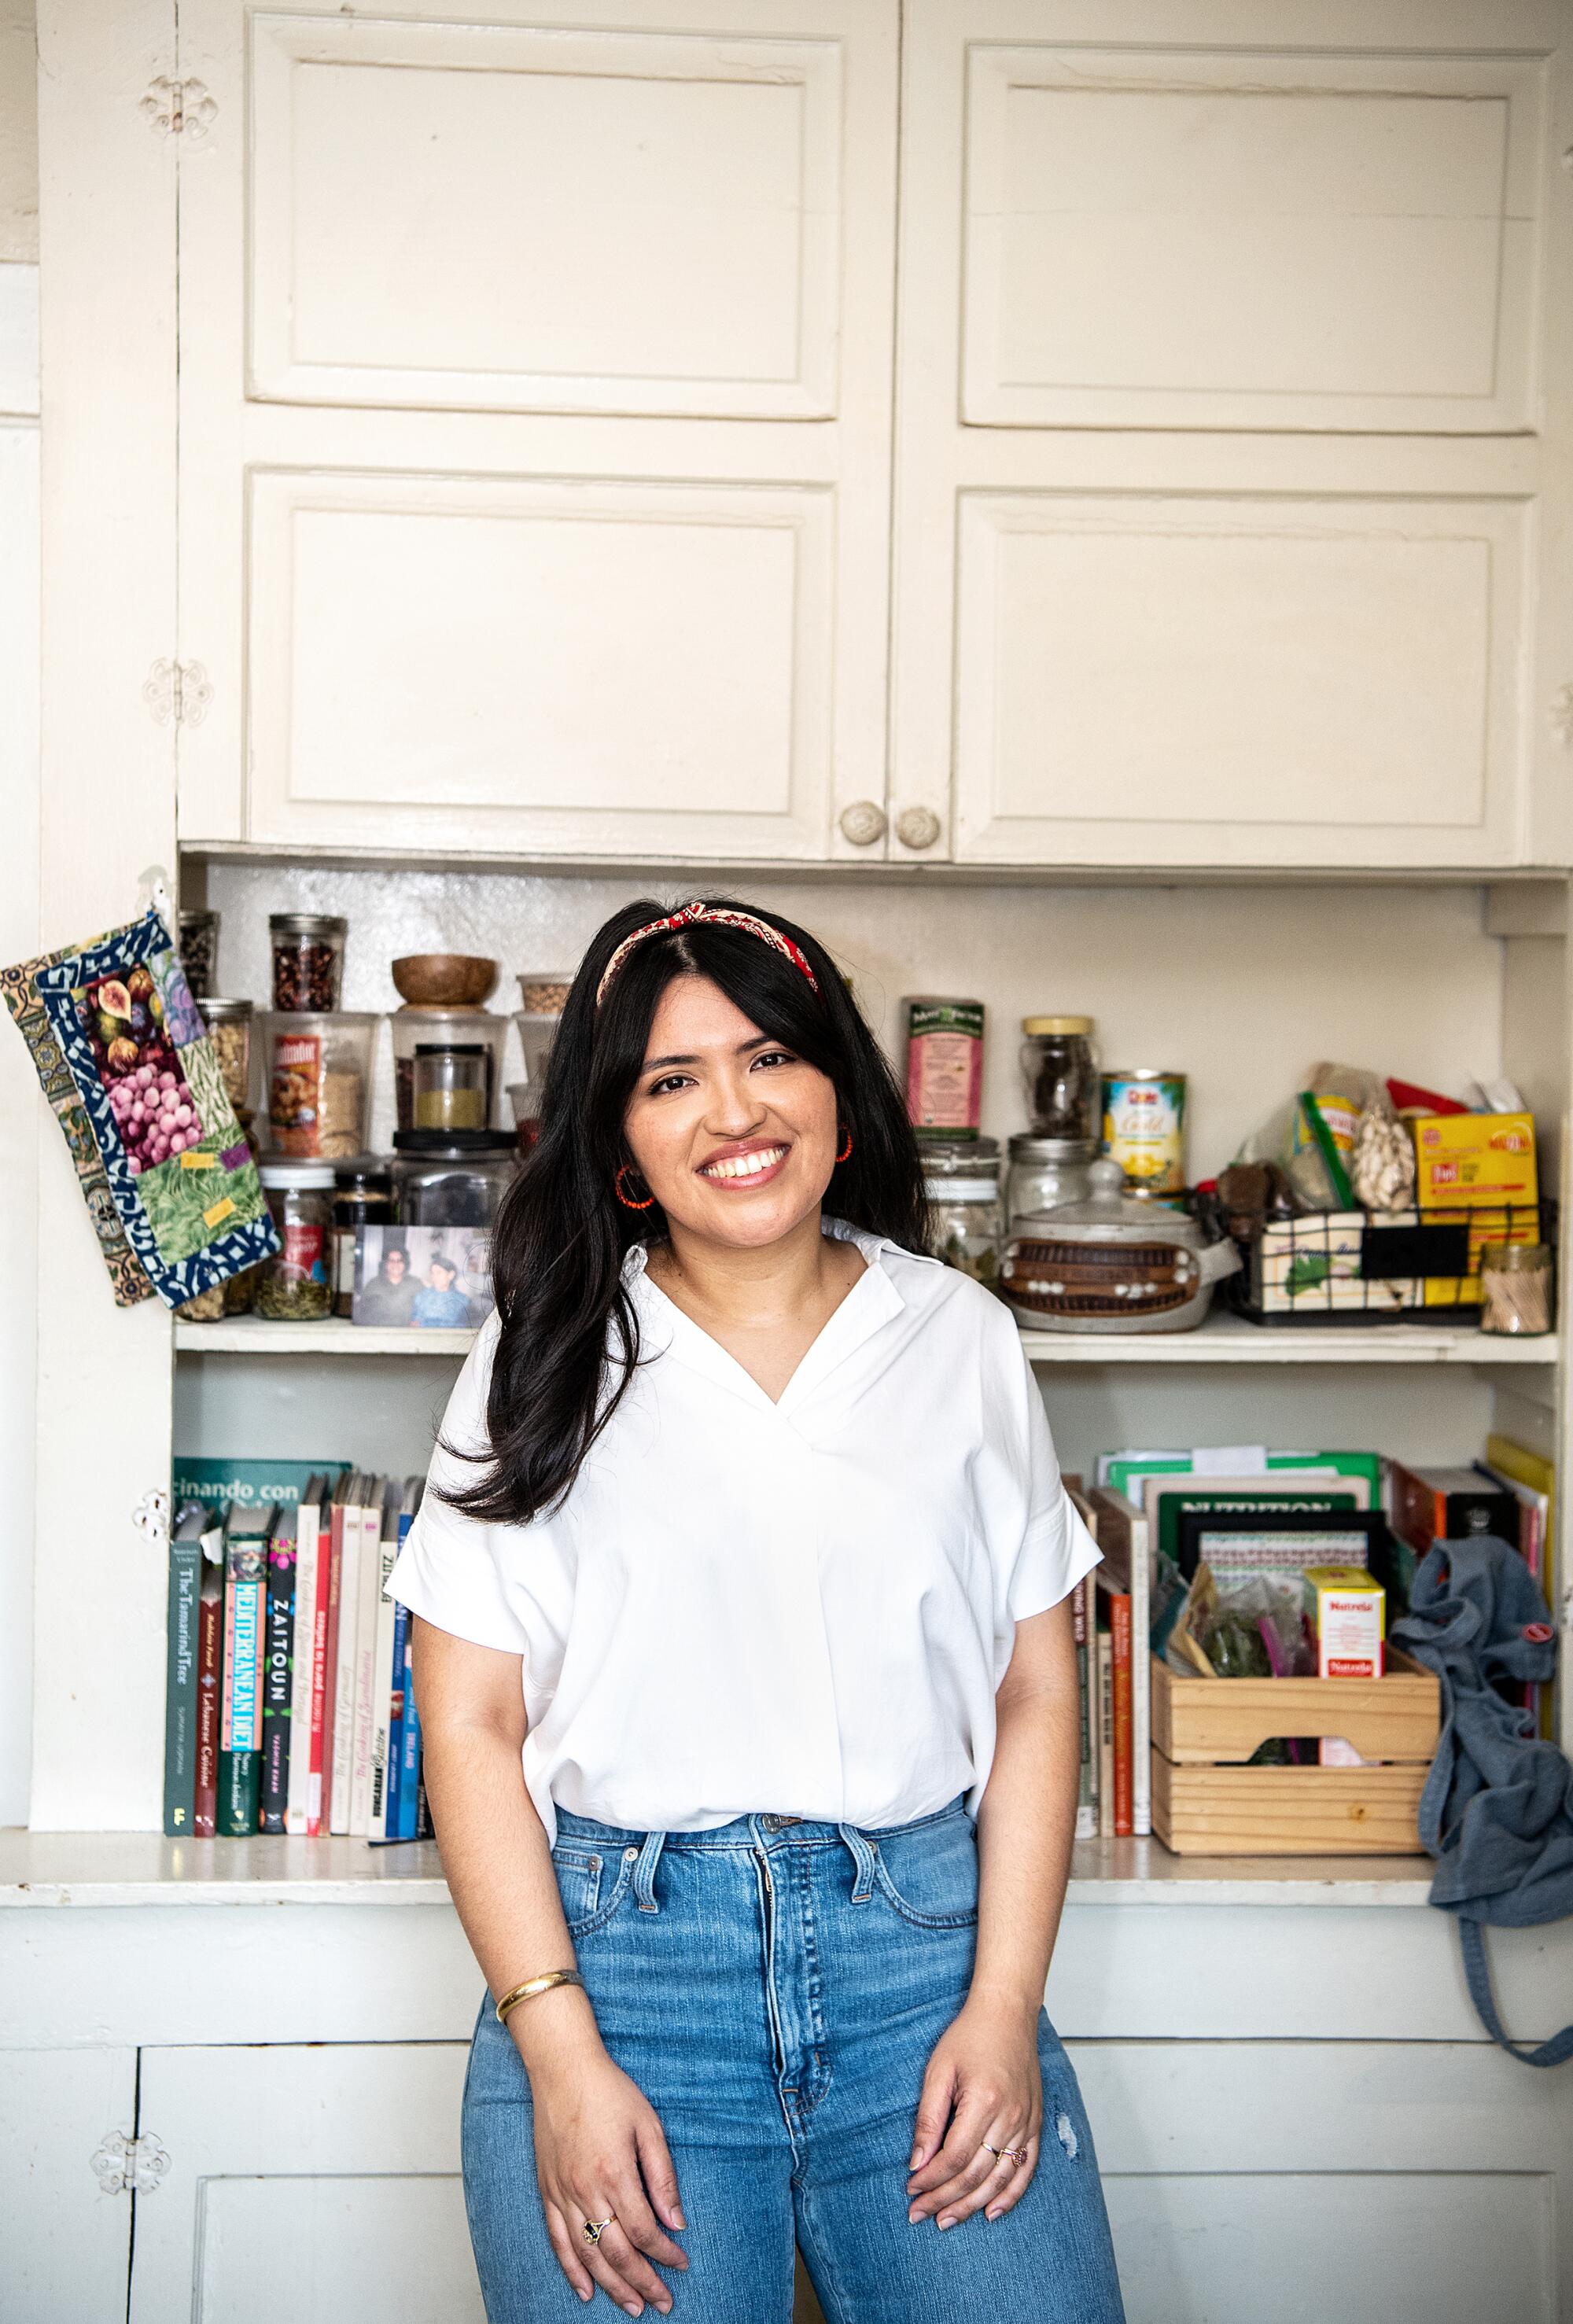     Food writer and online cooking instructor Karla Vásquez inside her kitchen